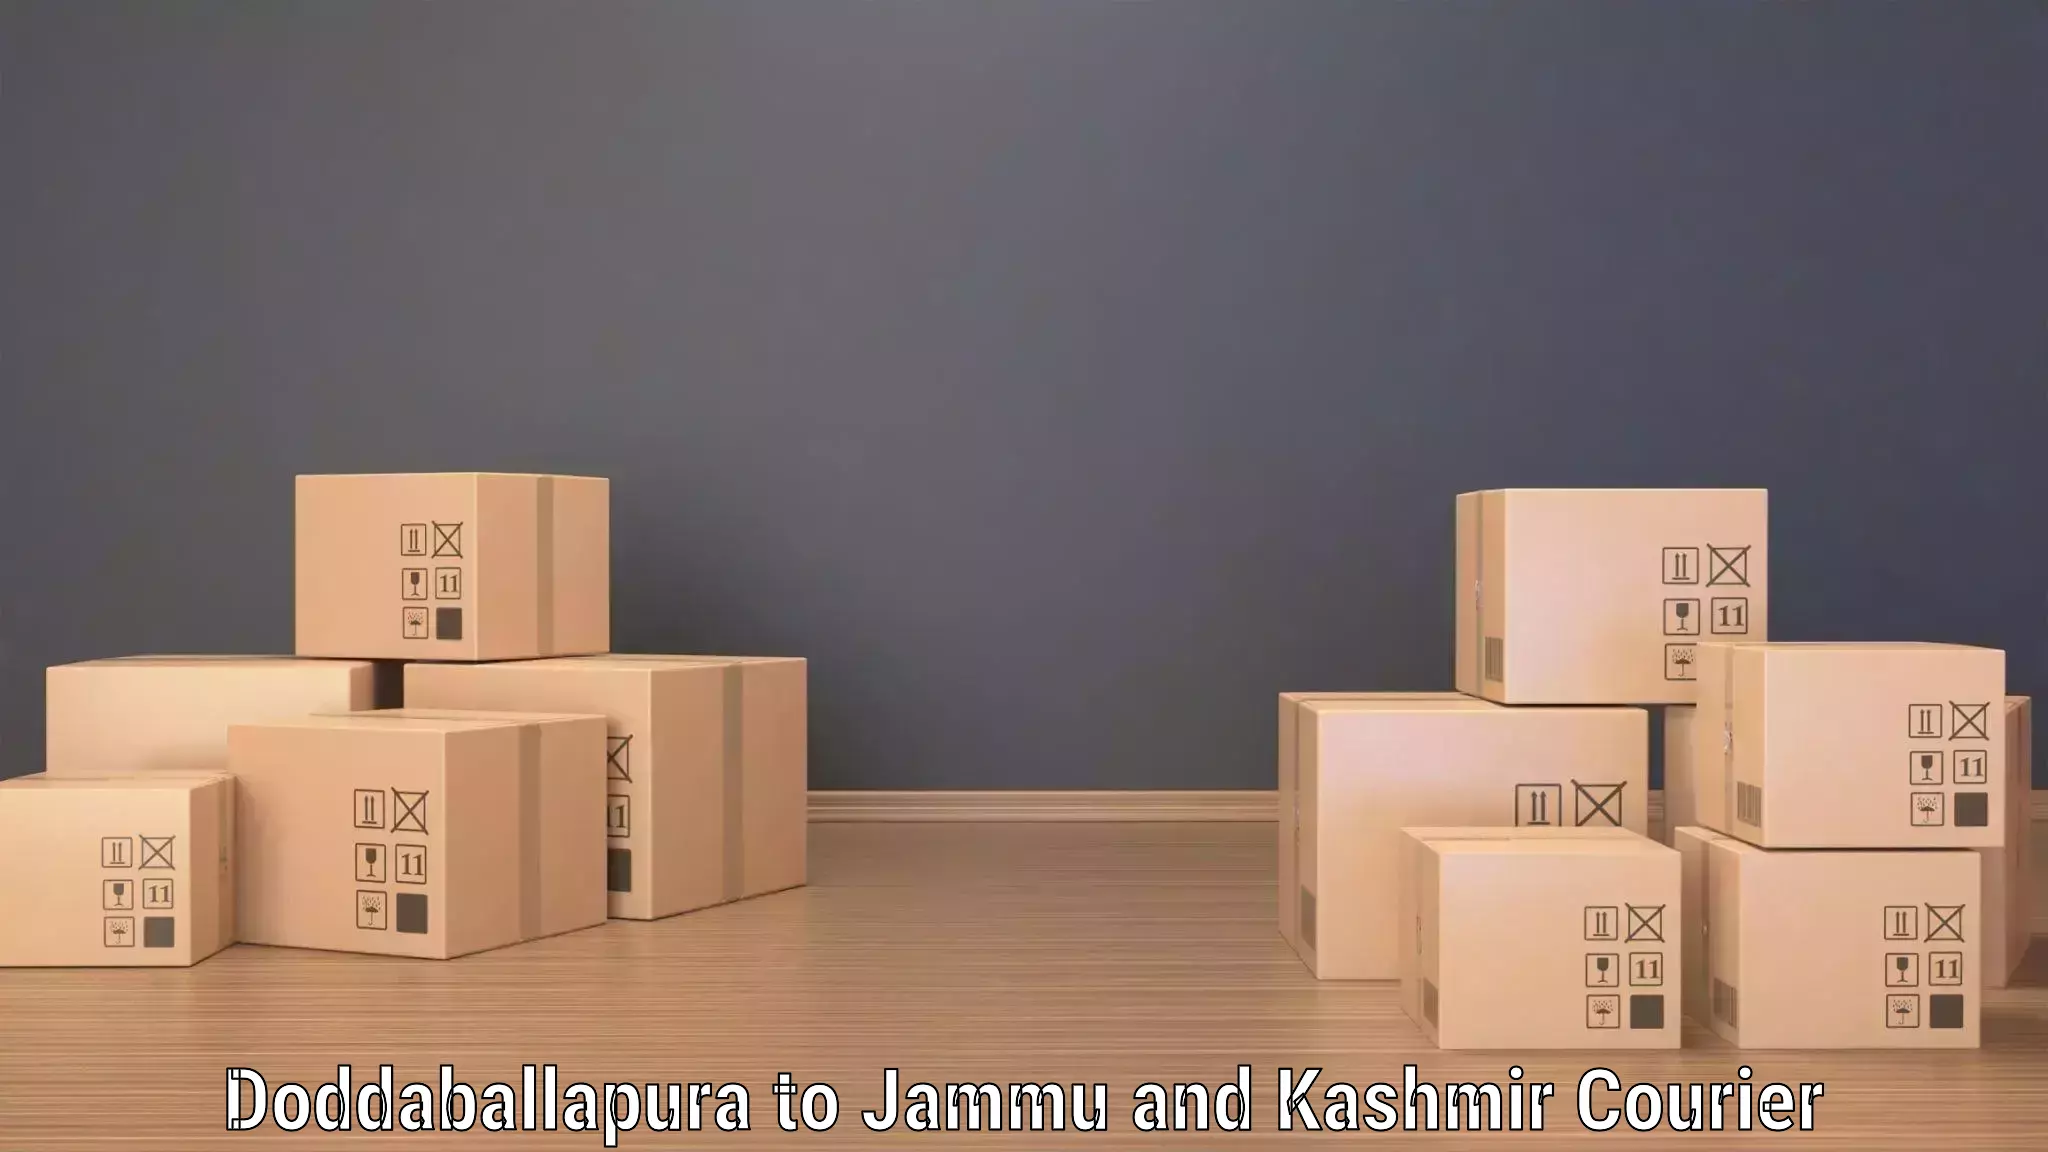 Express delivery capabilities Doddaballapura to University of Jammu